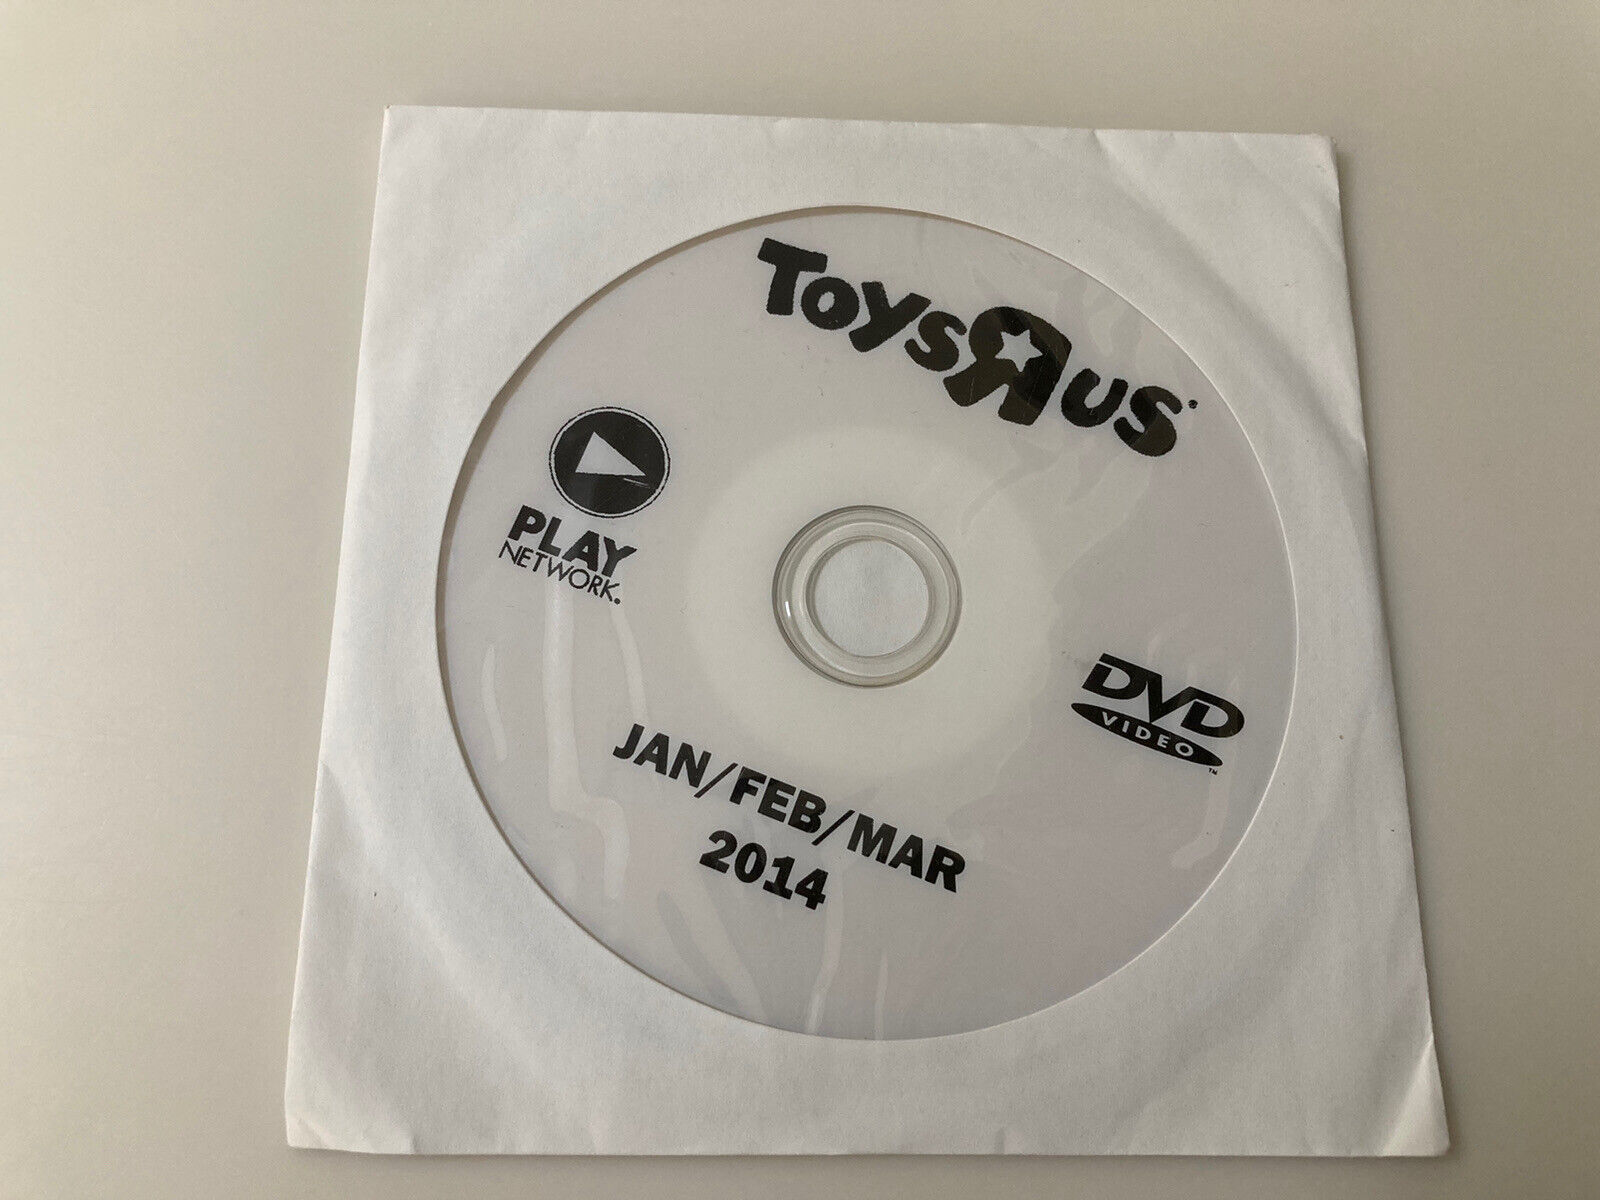 Toys R Us Play Network Dvd Jan Feb March 2014 Movie Dept. Promotional Loop